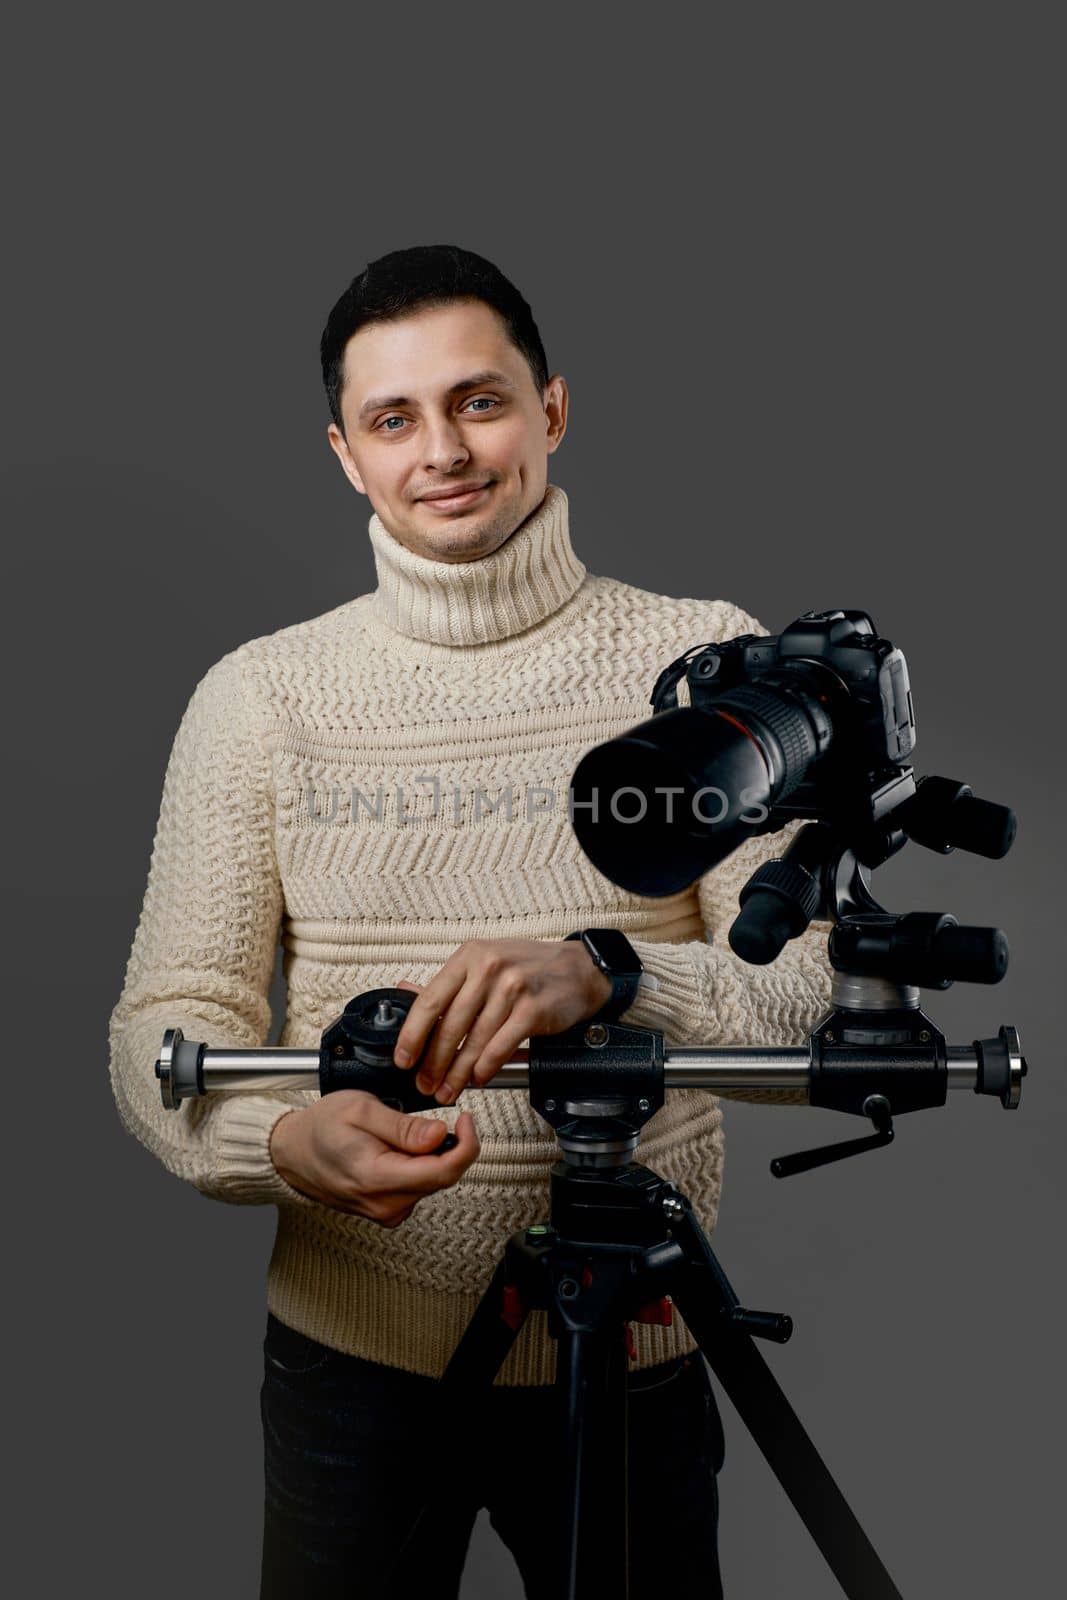 photographer in sweater near digital camera on tripod by erstudio